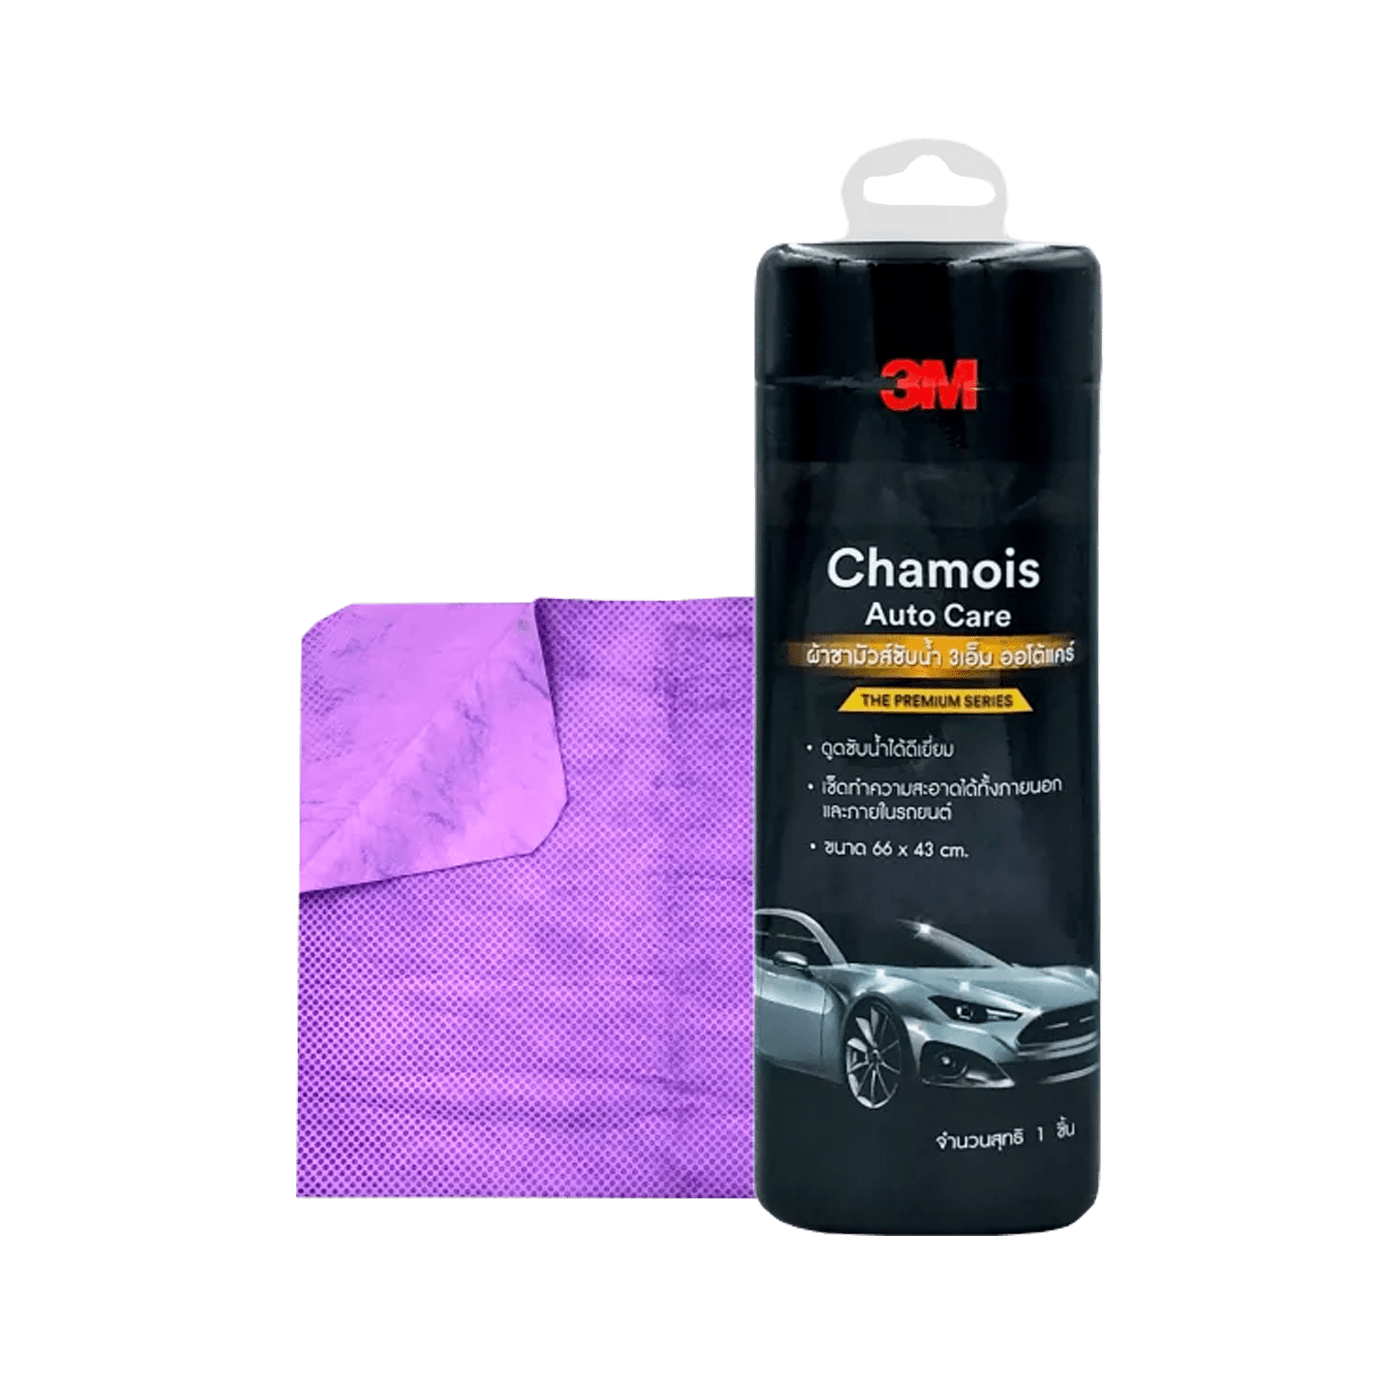 3M Chamois Auto Care